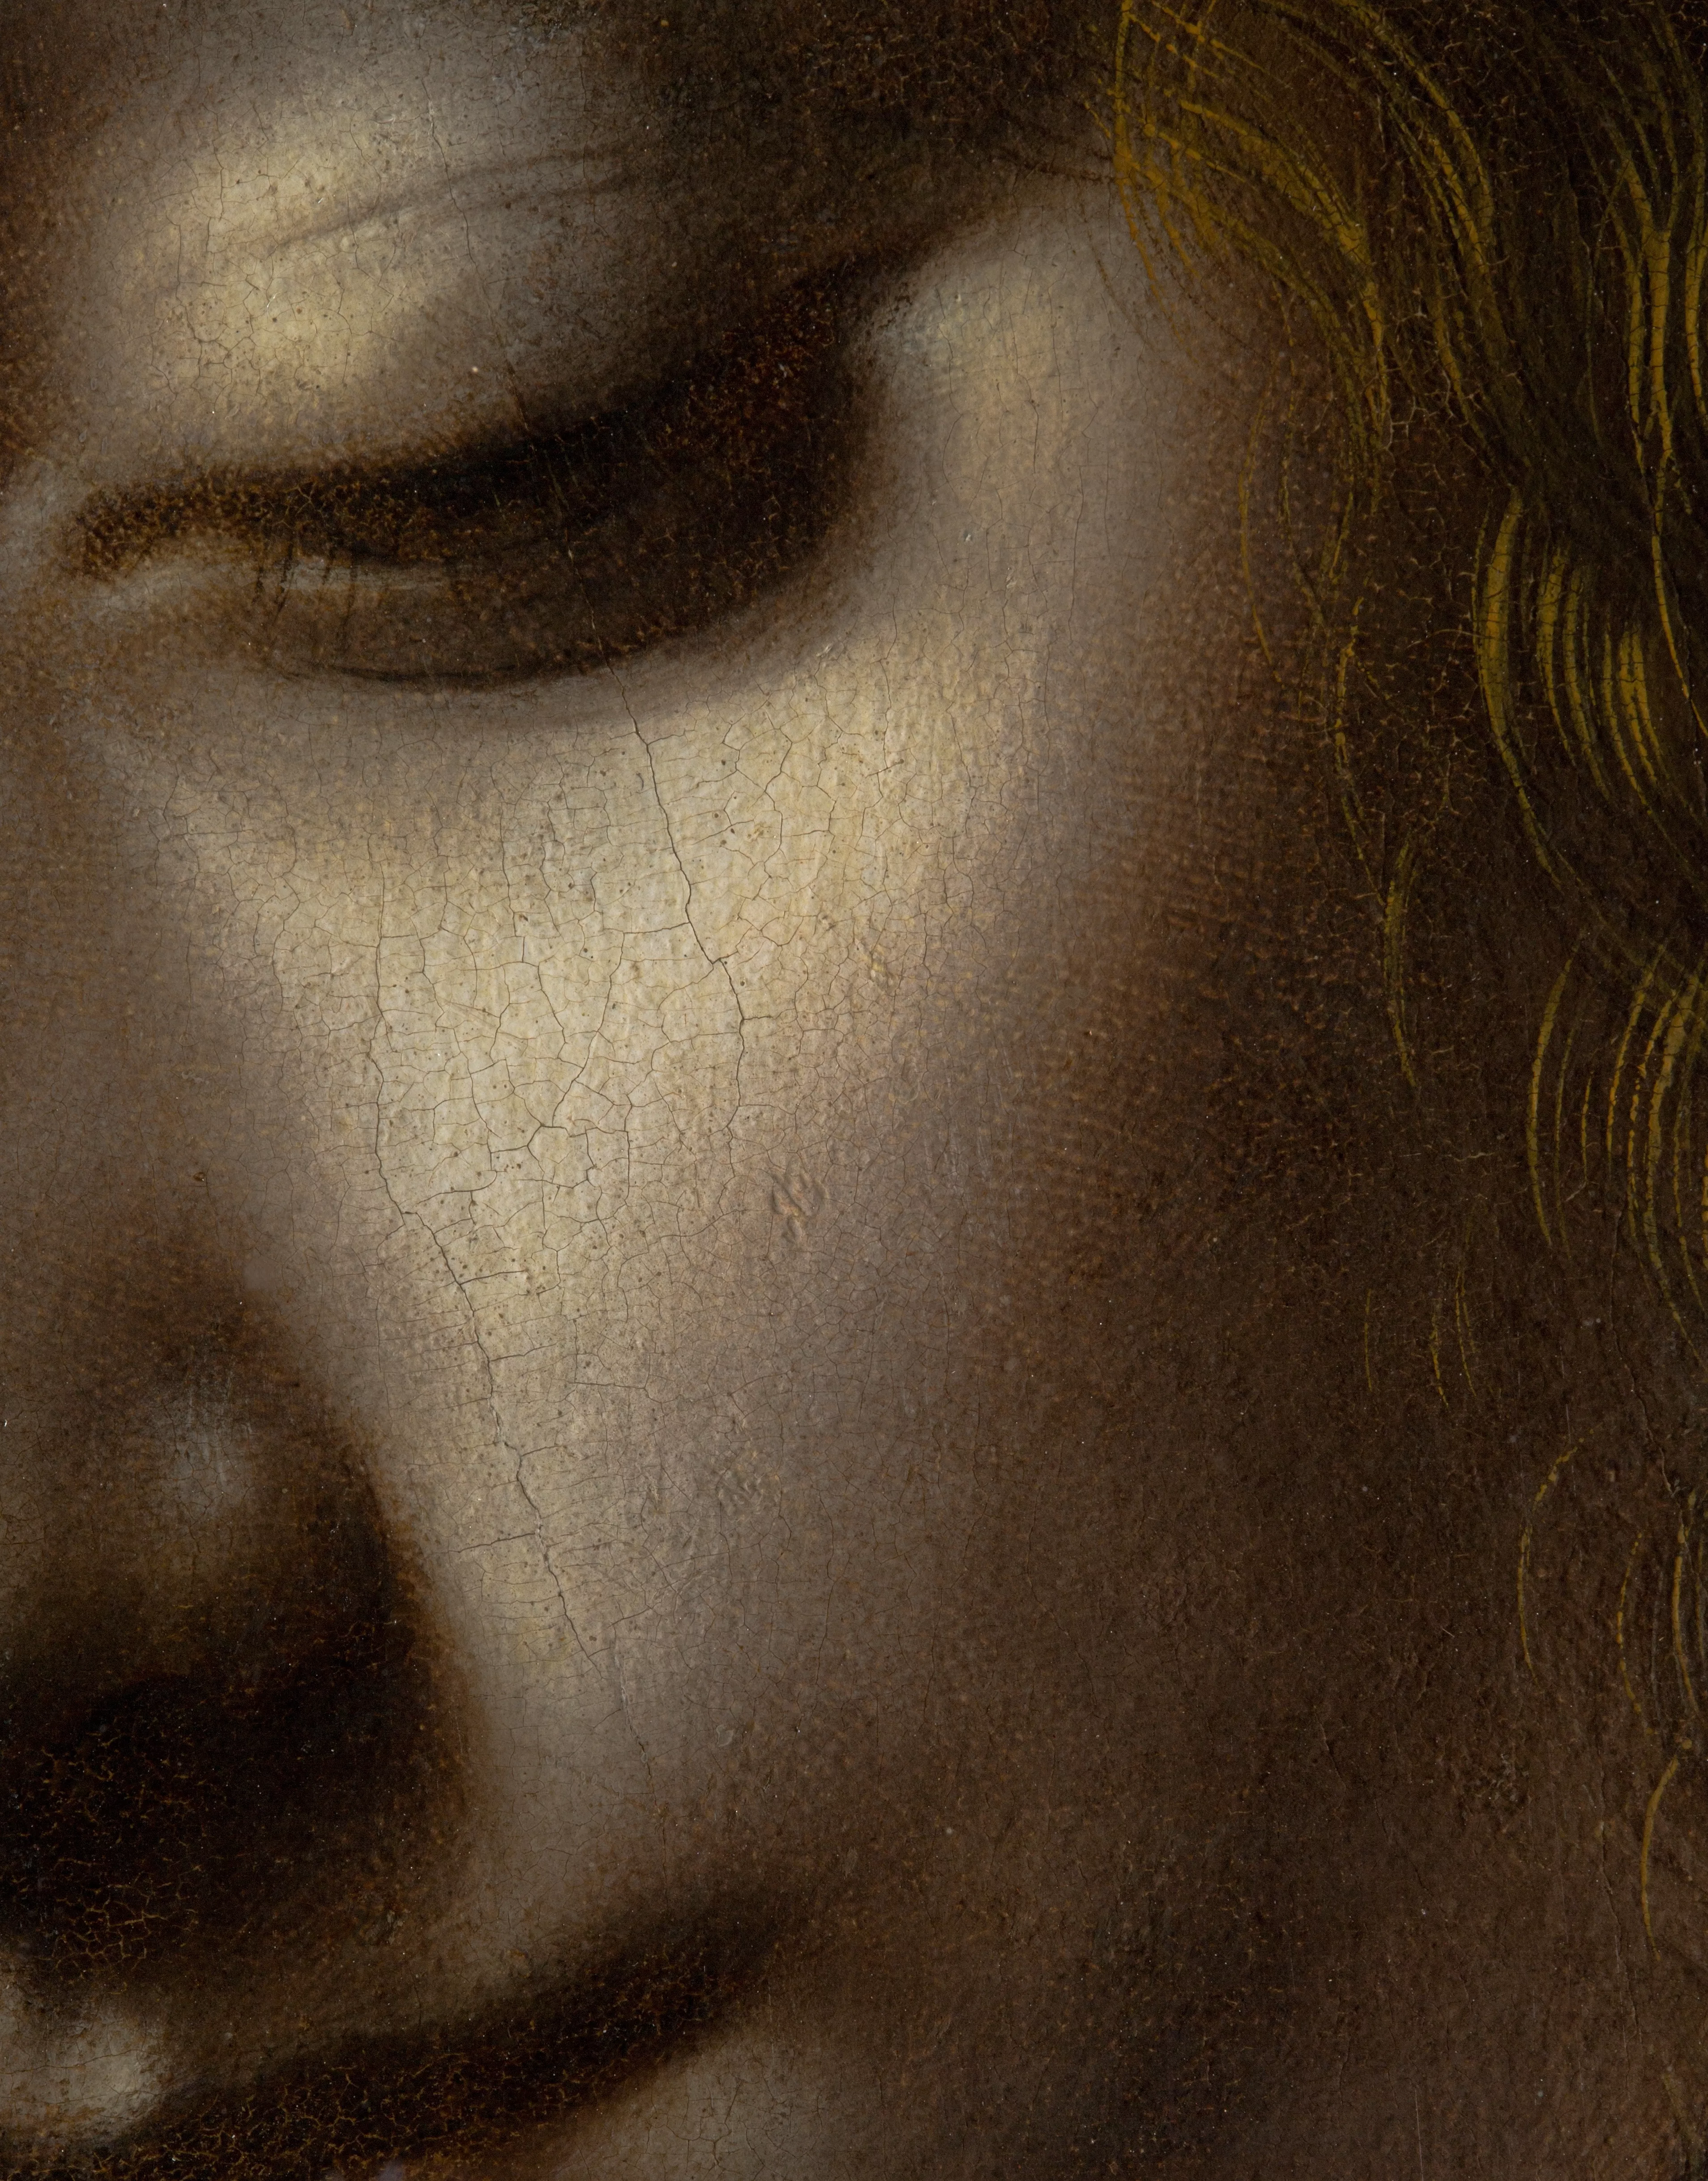 Leonardo da Vinci drawings revealed underneath The Virgin Of The Rocks